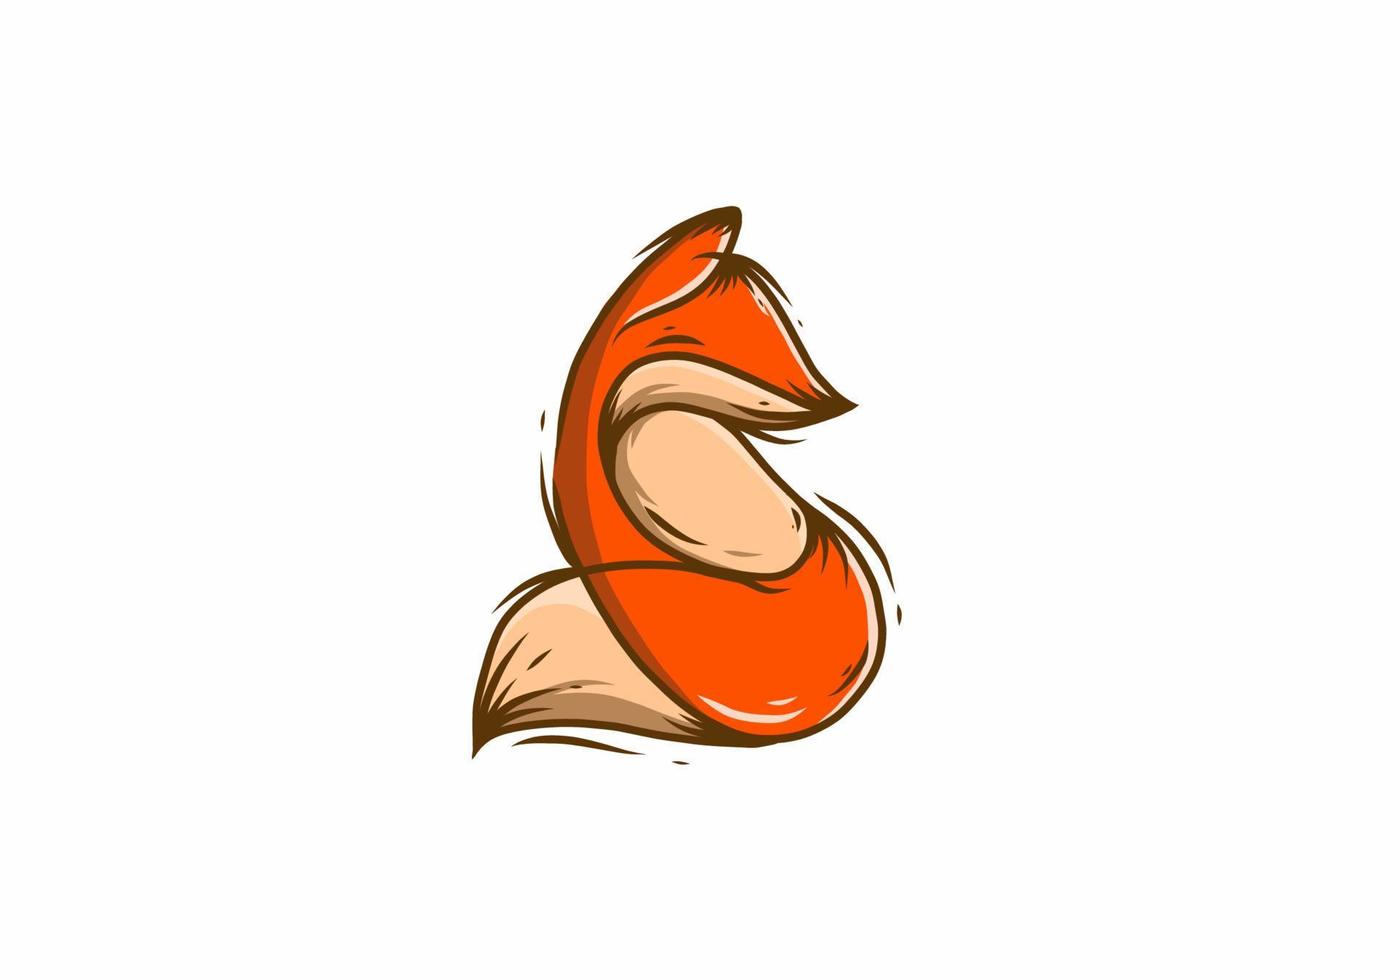 Simple orange fox illustration vector